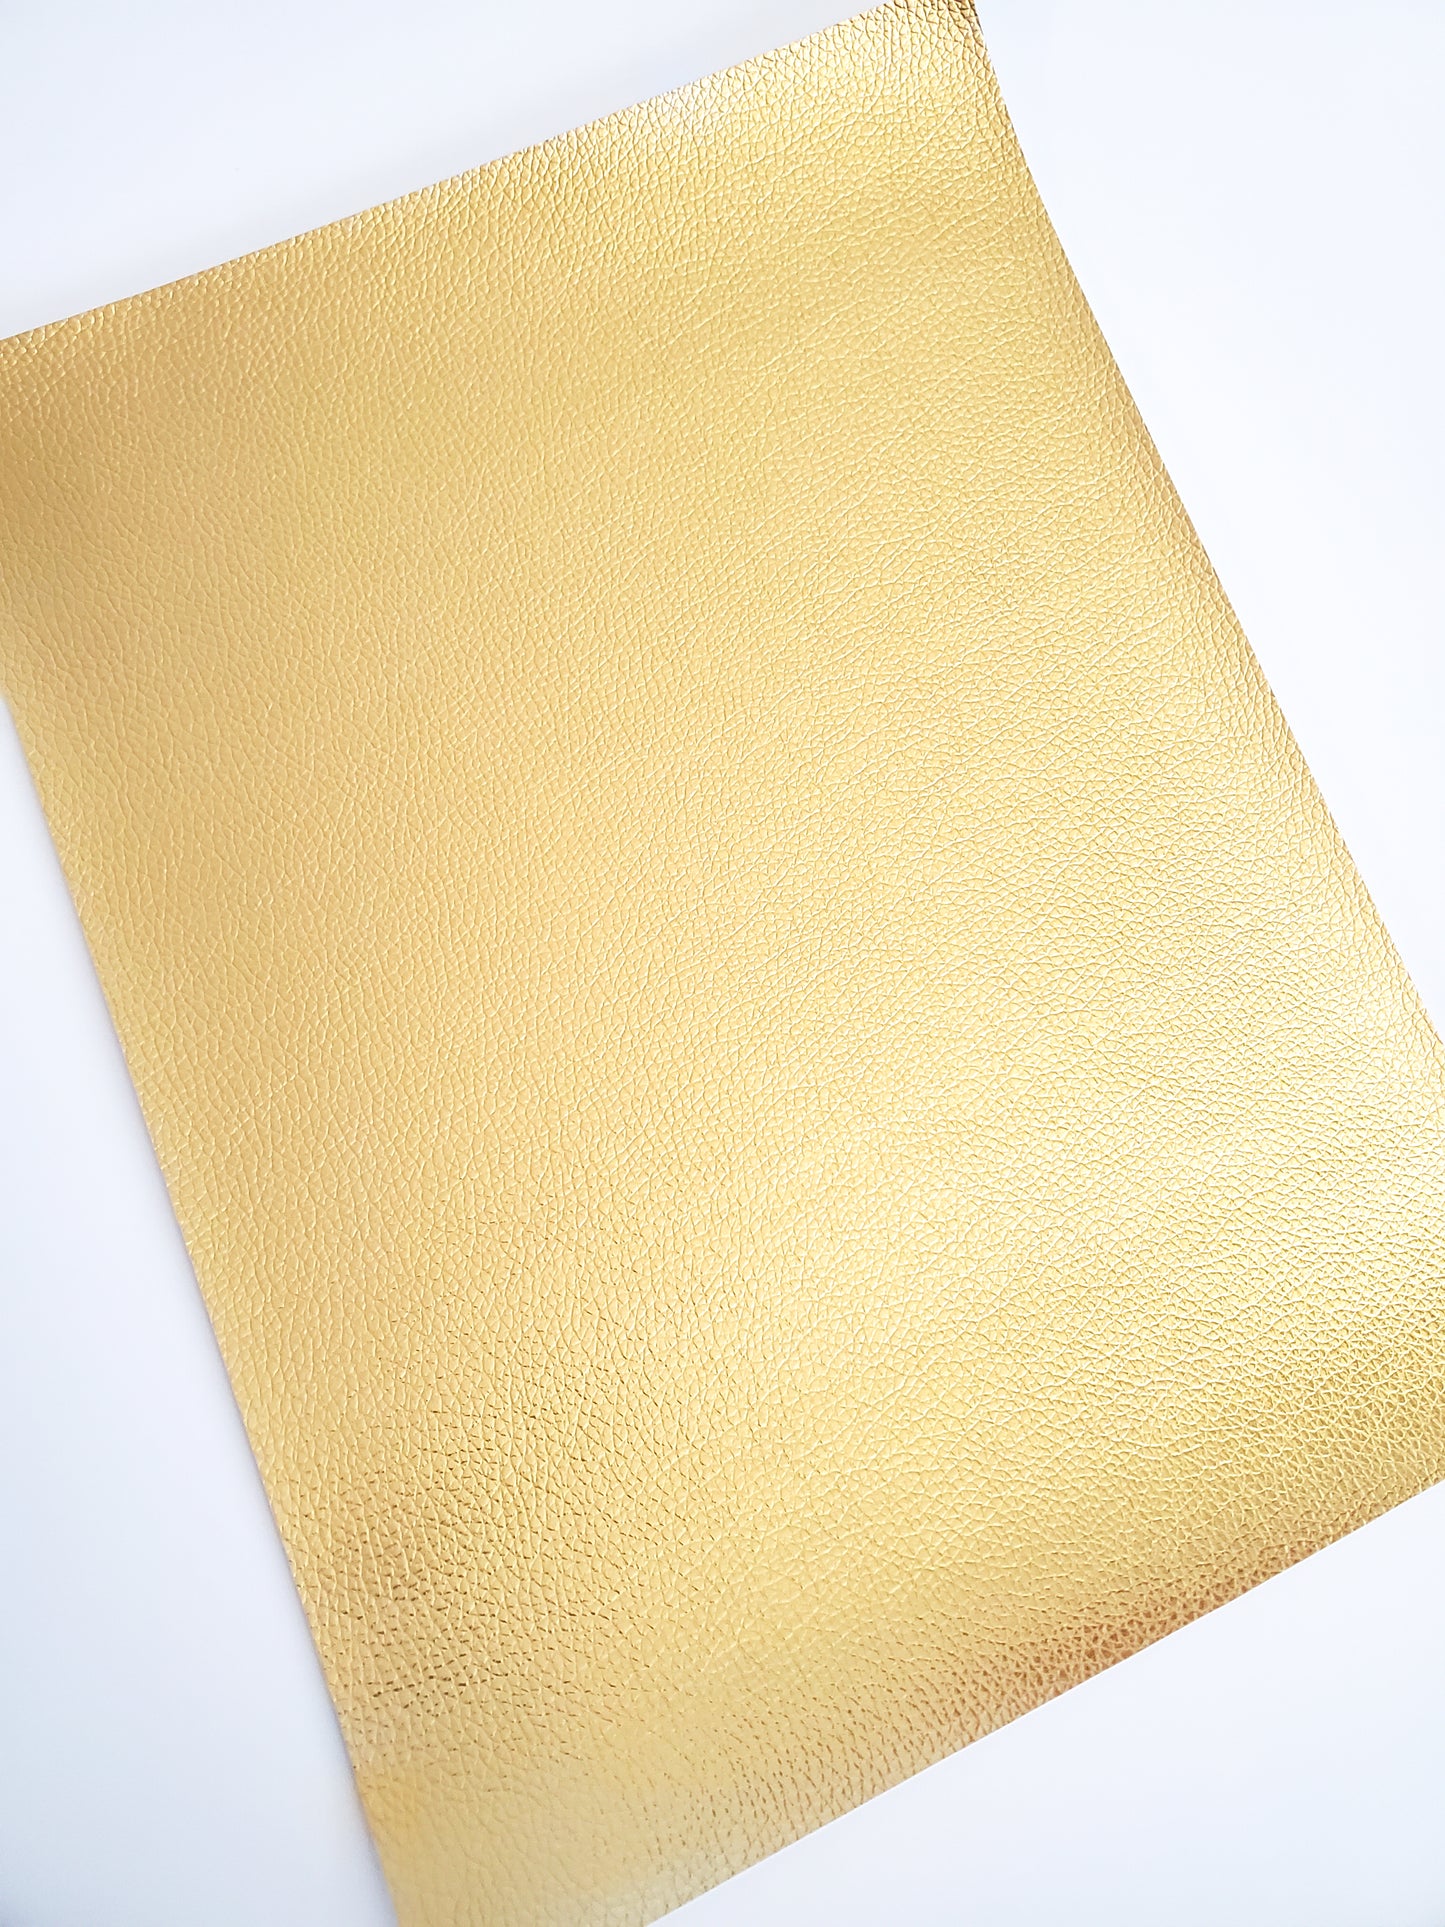 Metallic Gold Pebbled 9x12 faux leather sheet